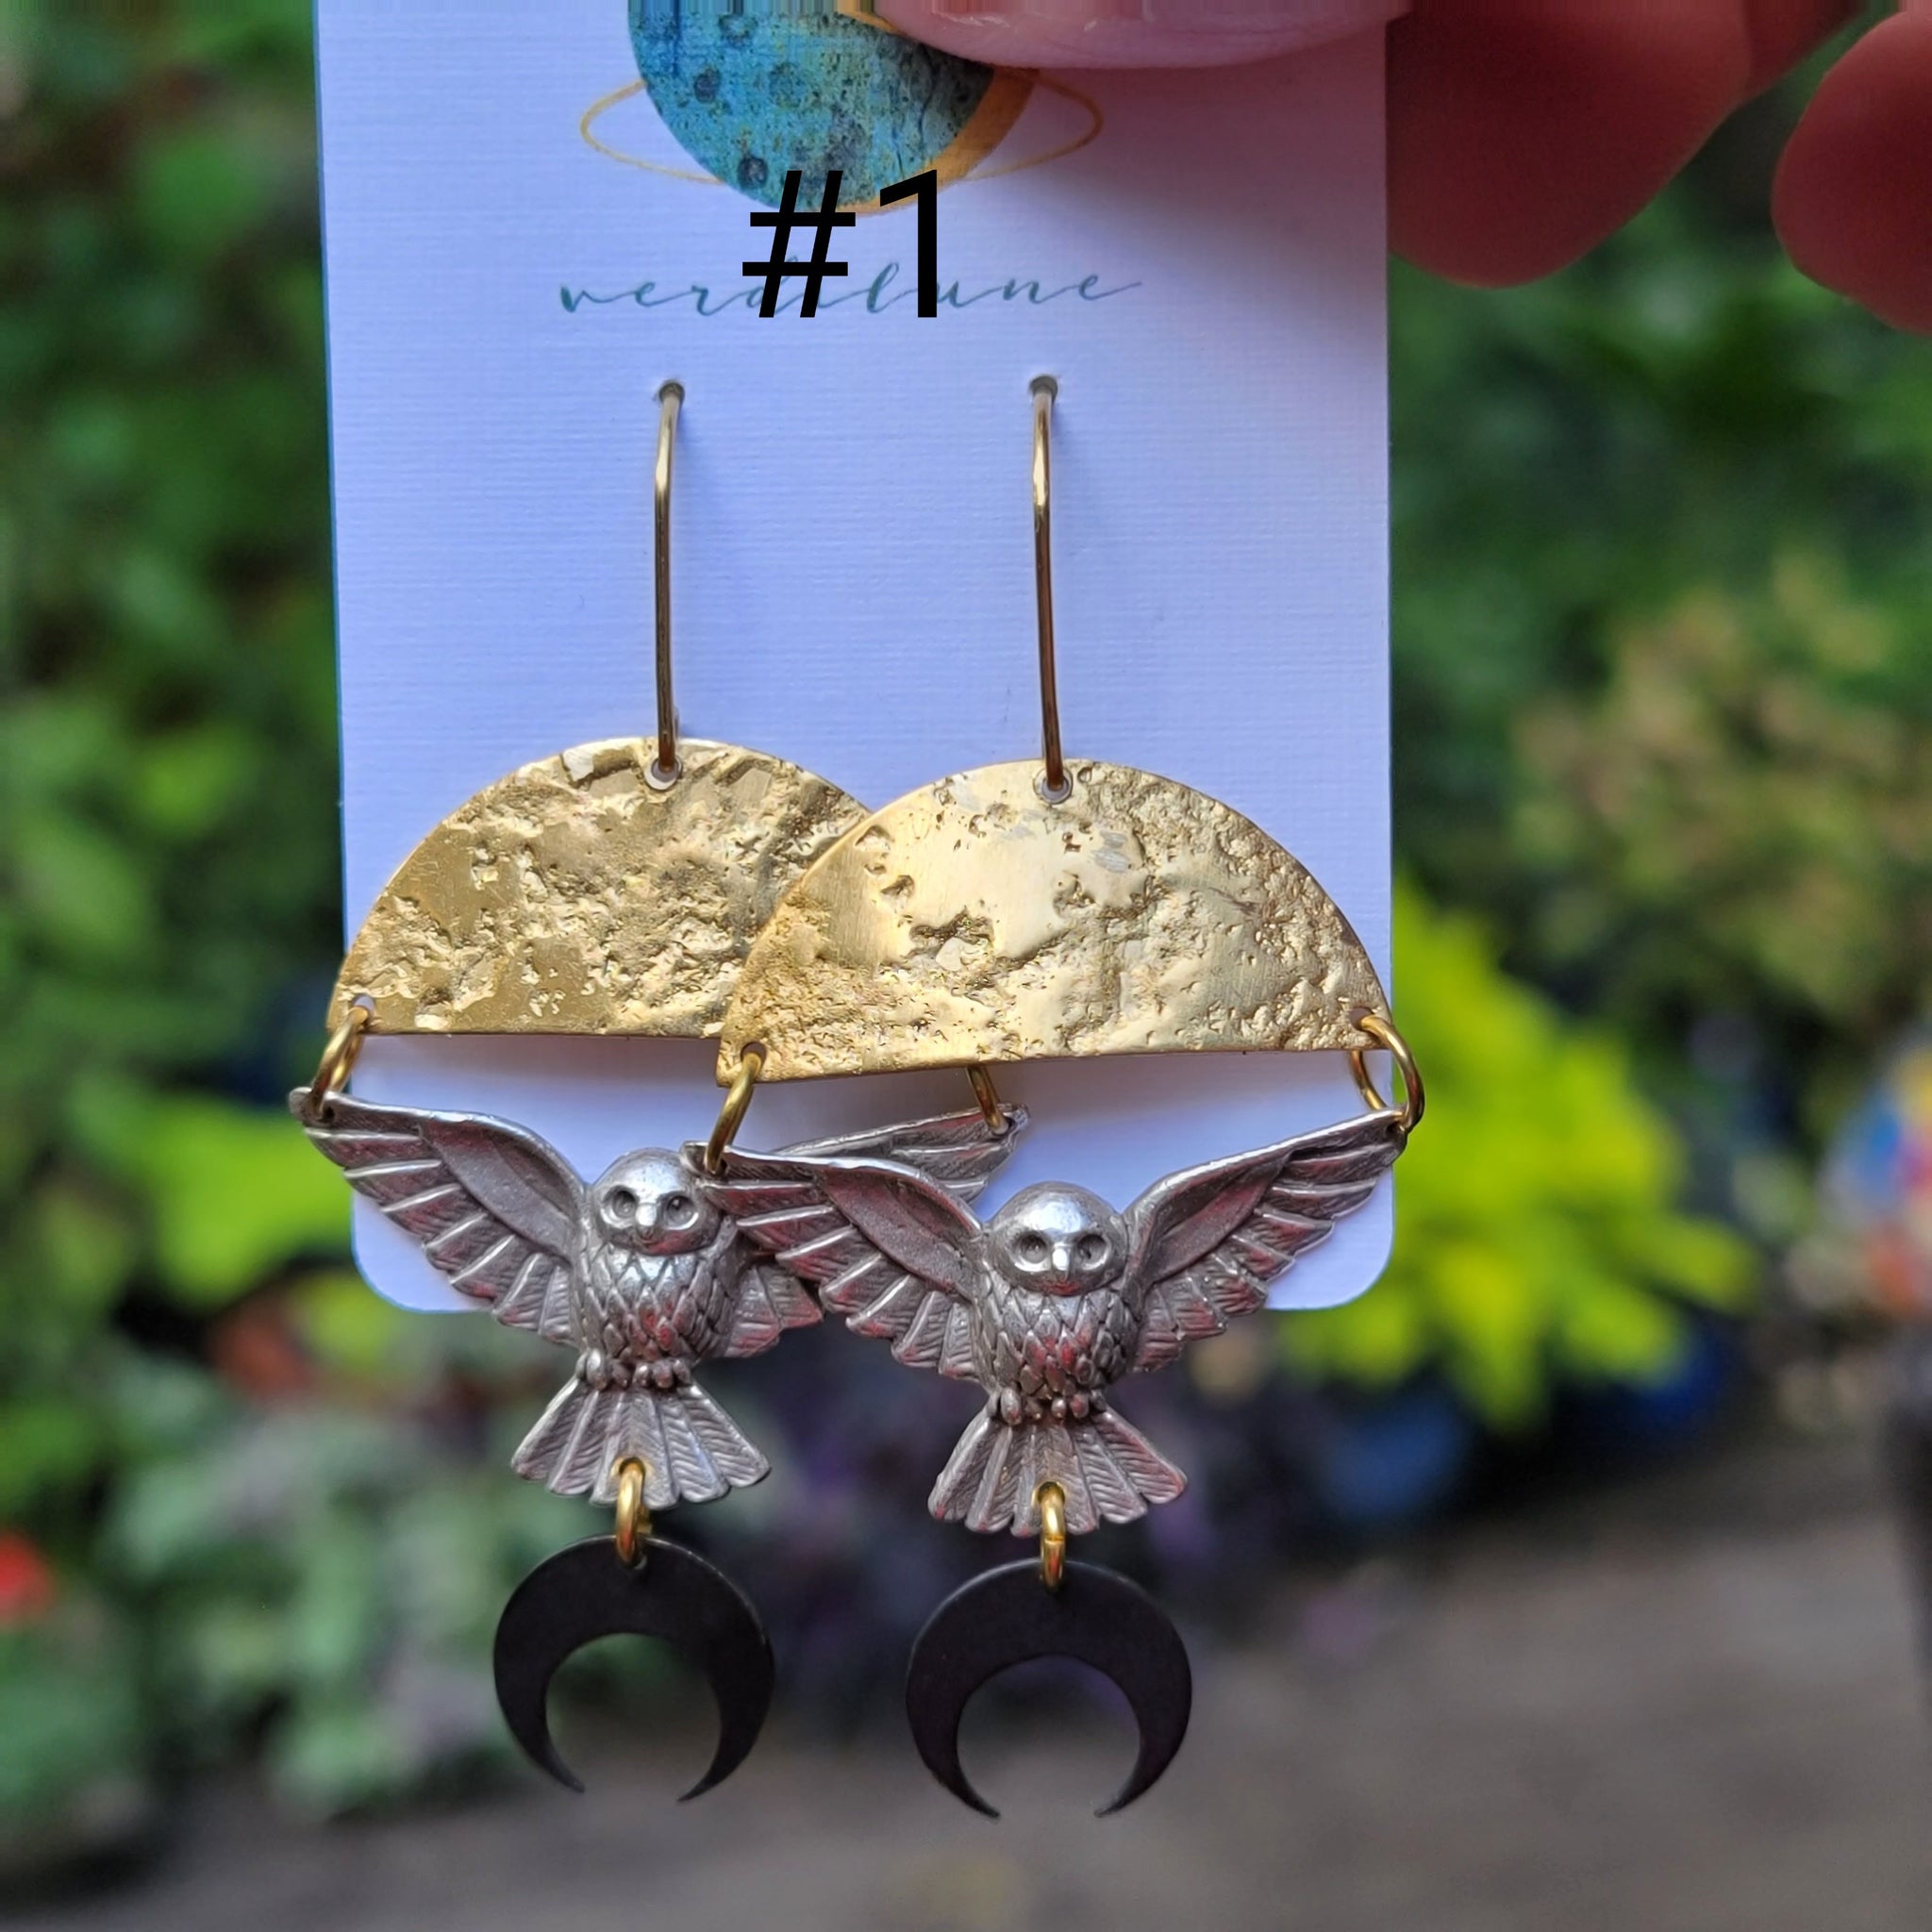 Moonlit Owl Mixed Metals Earrings